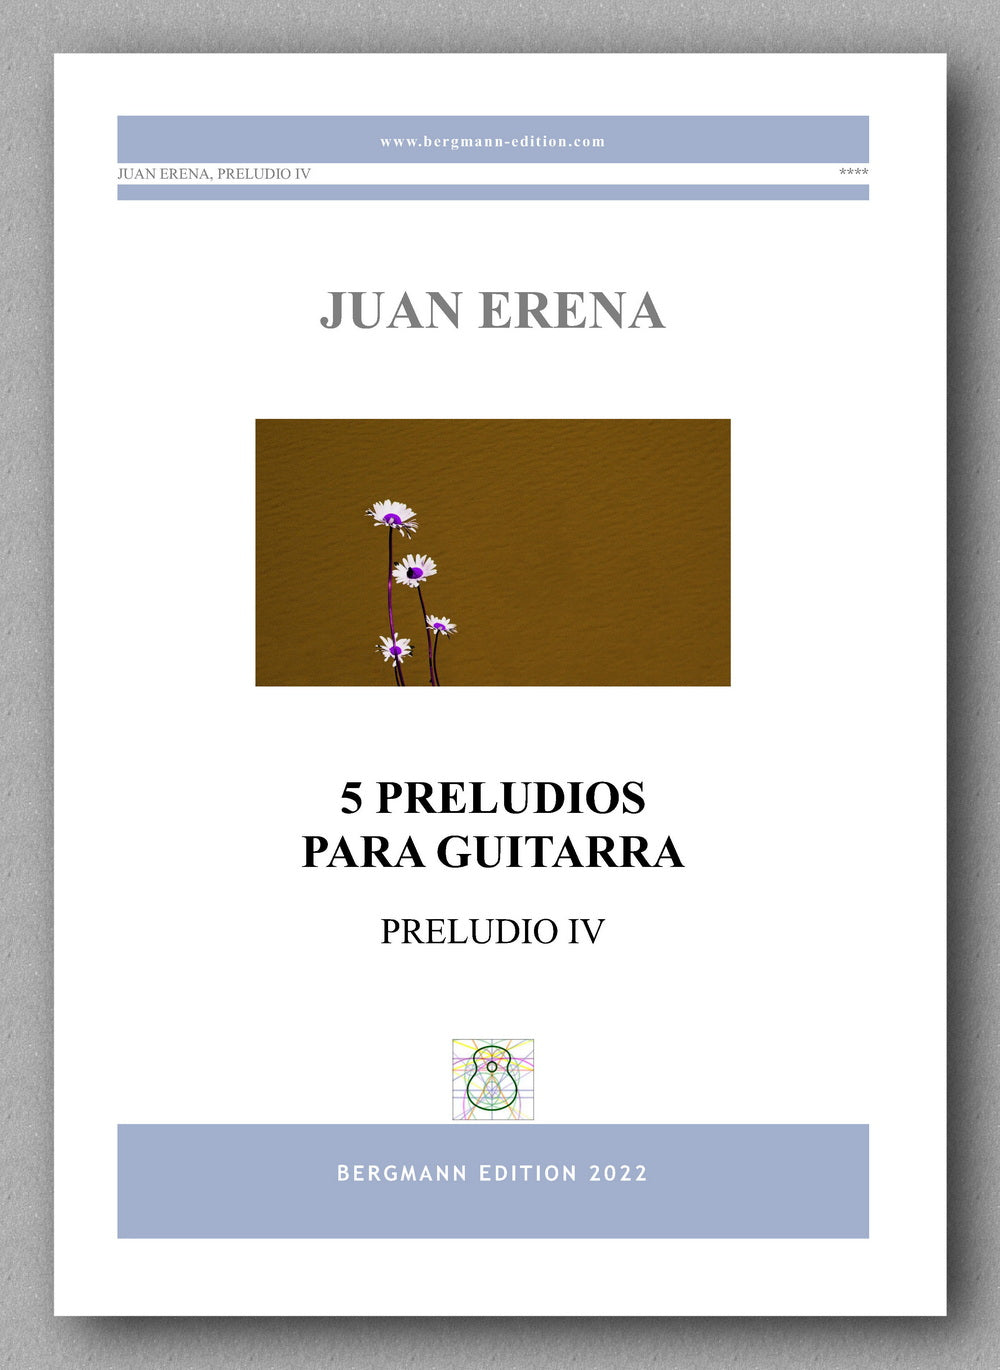 Juan Erena, PRELUDIO IV - preview of the cover